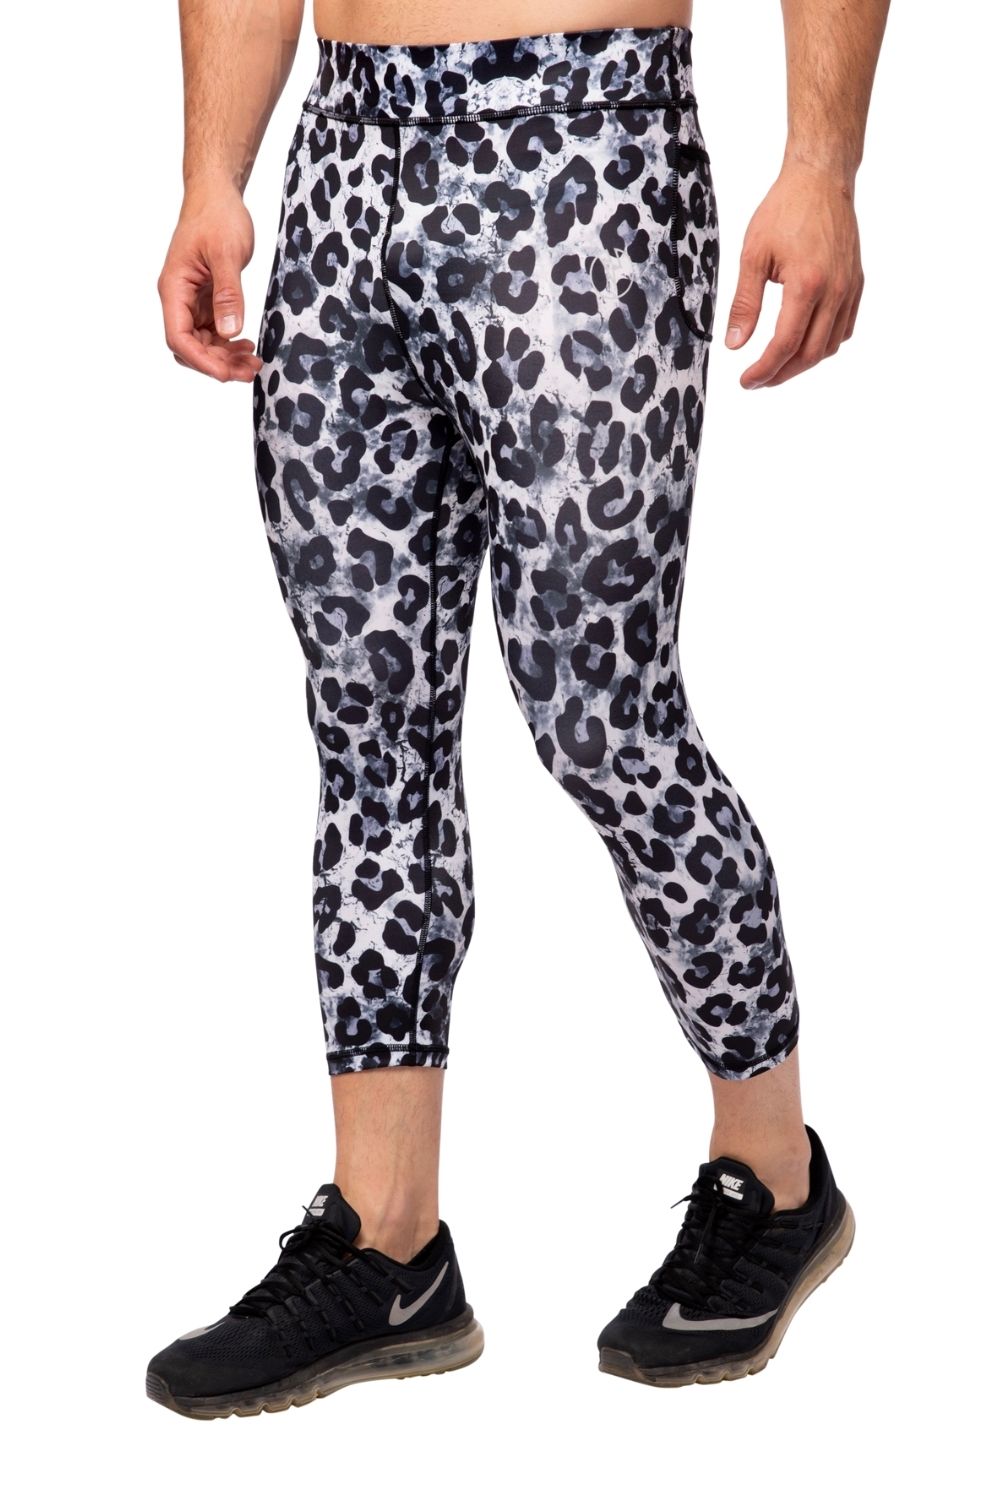 Snow Leopard Animal Print Leggings